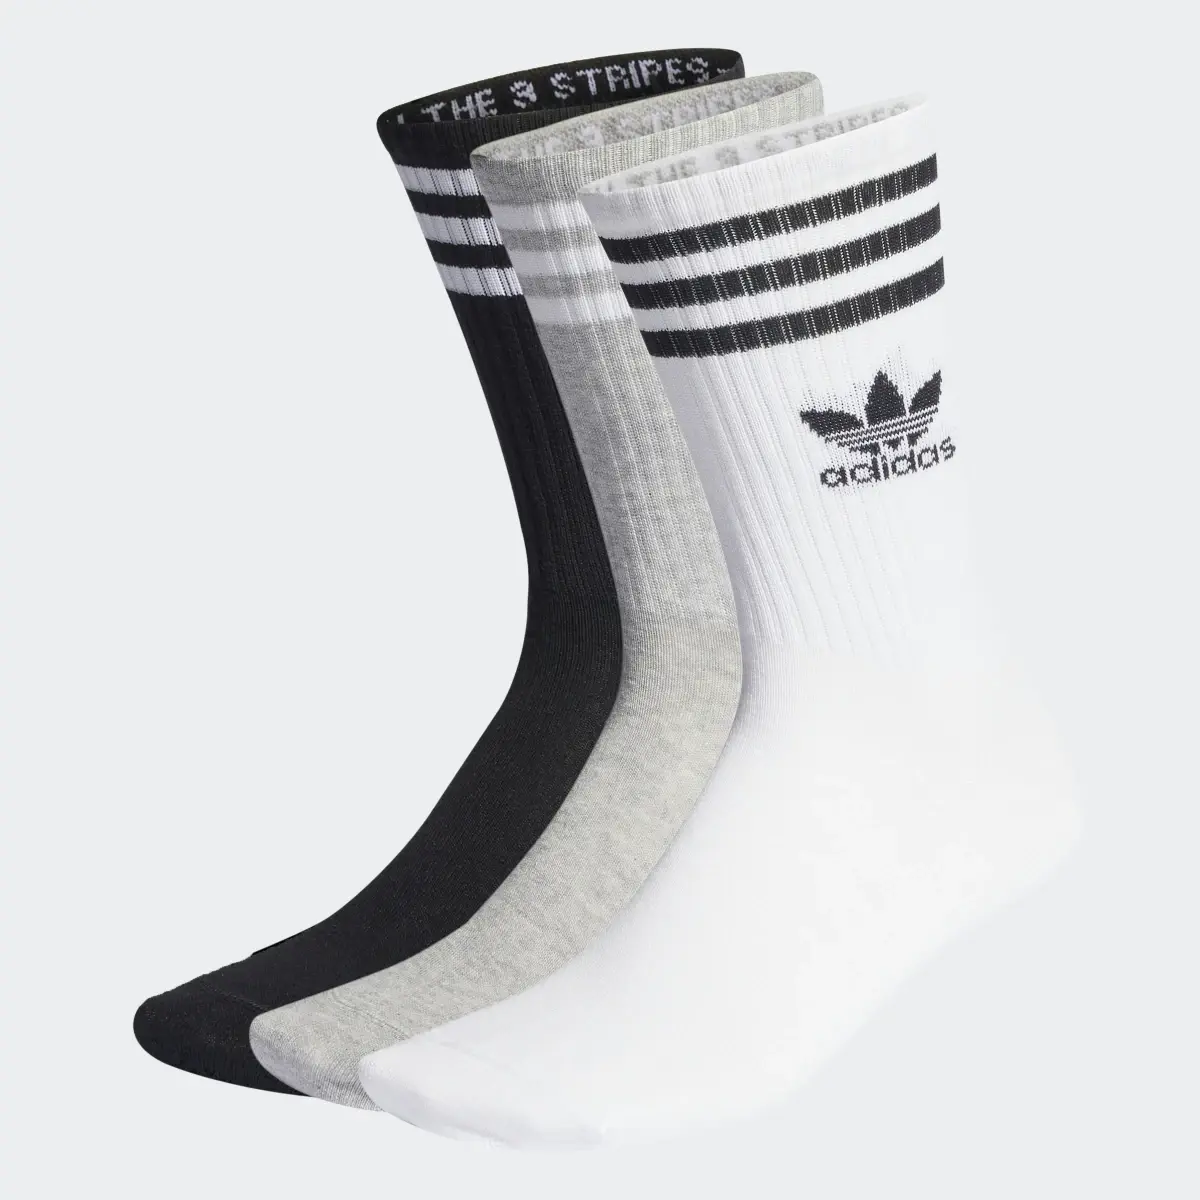 Adidas Mid Cut Crew Socken, 3 Paar. 2